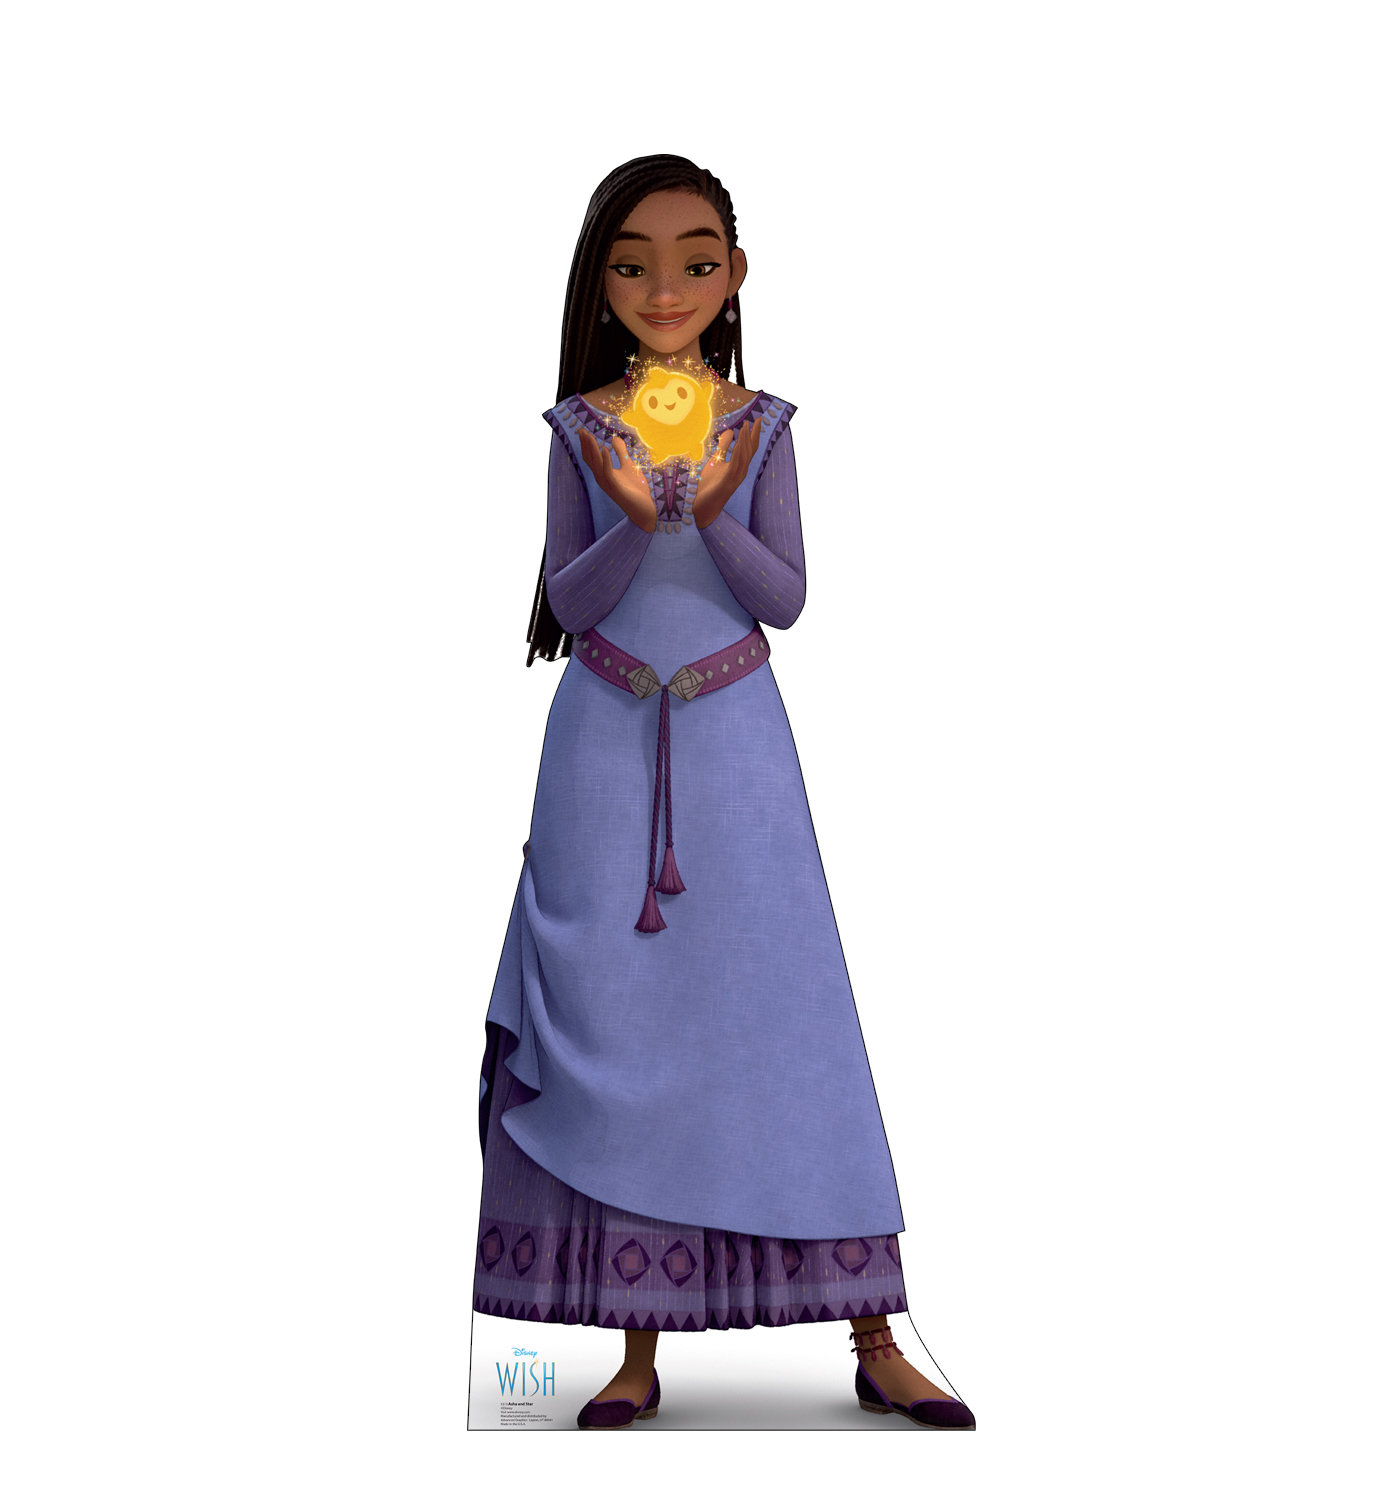 Disney Princess Official Lifesize Cardboard Cutouts - Set of 6